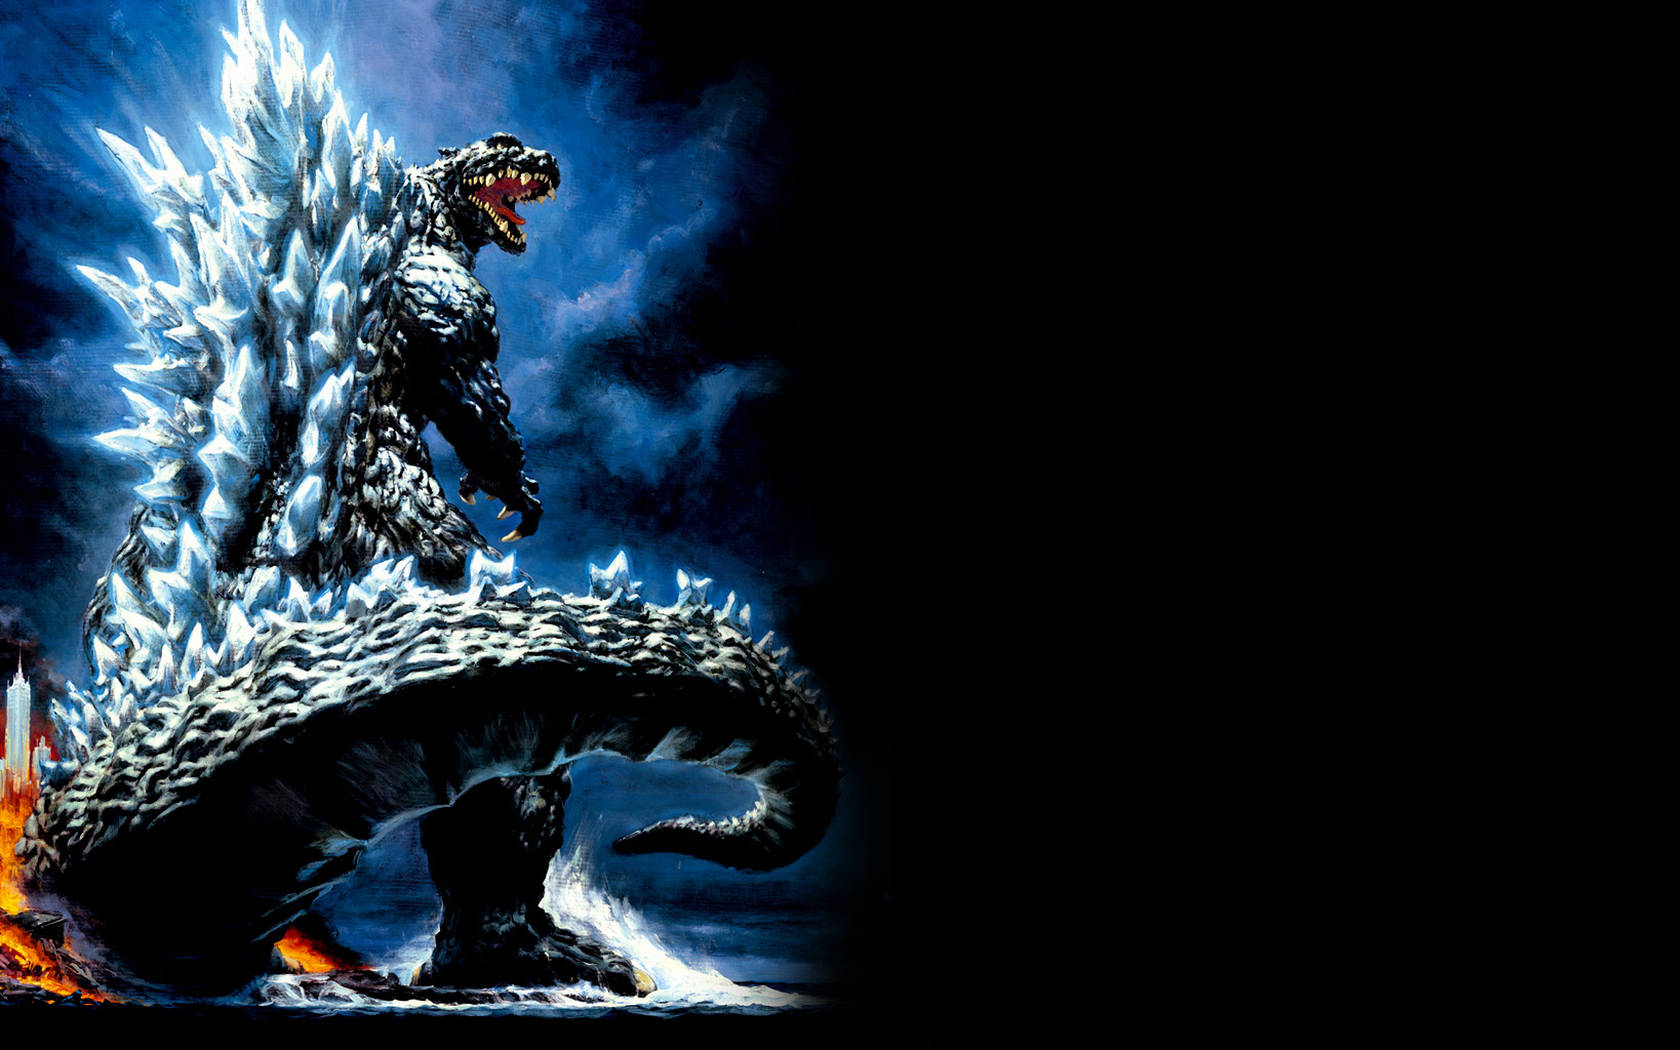 Free Godzilla 4k Wallpaper Downloads, [100+] Godzilla 4k Wallpapers for  FREE 